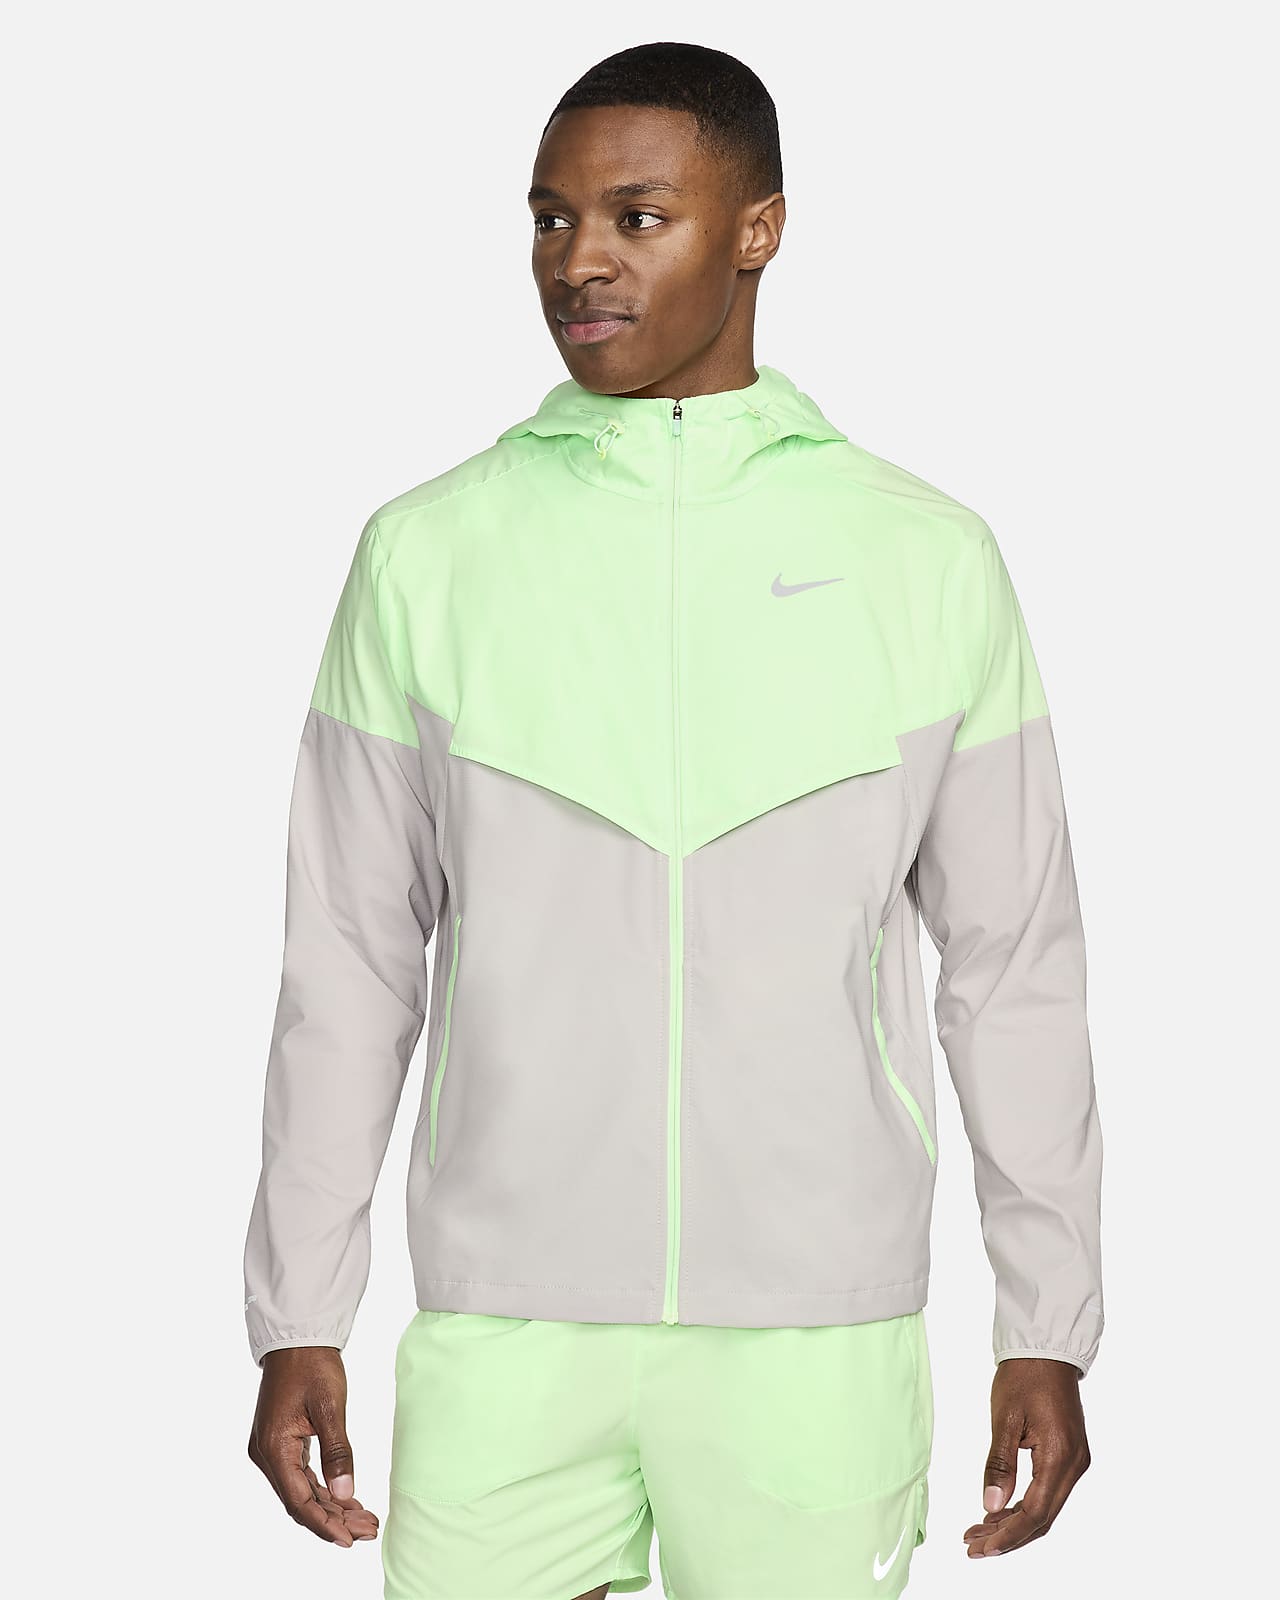 Vols, Tennessee Nike Windrunner Jacket